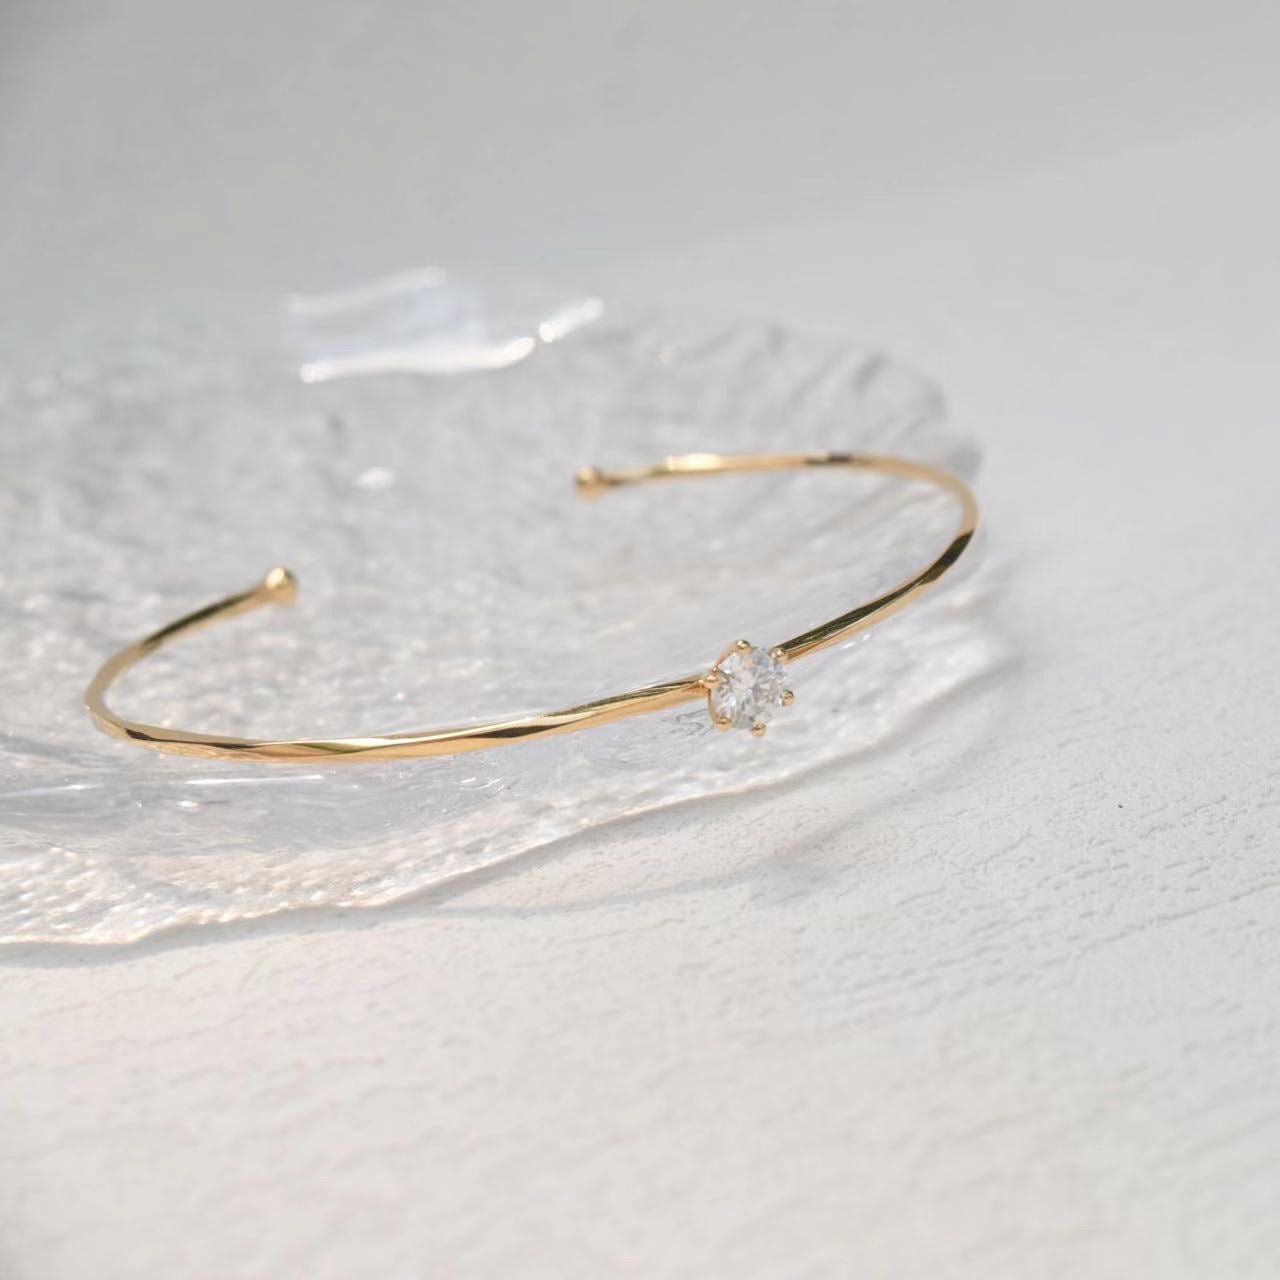 Inspire Designs Curved Bar Bangle Bracelet | Shoe Gallery Jewelry Bracelets